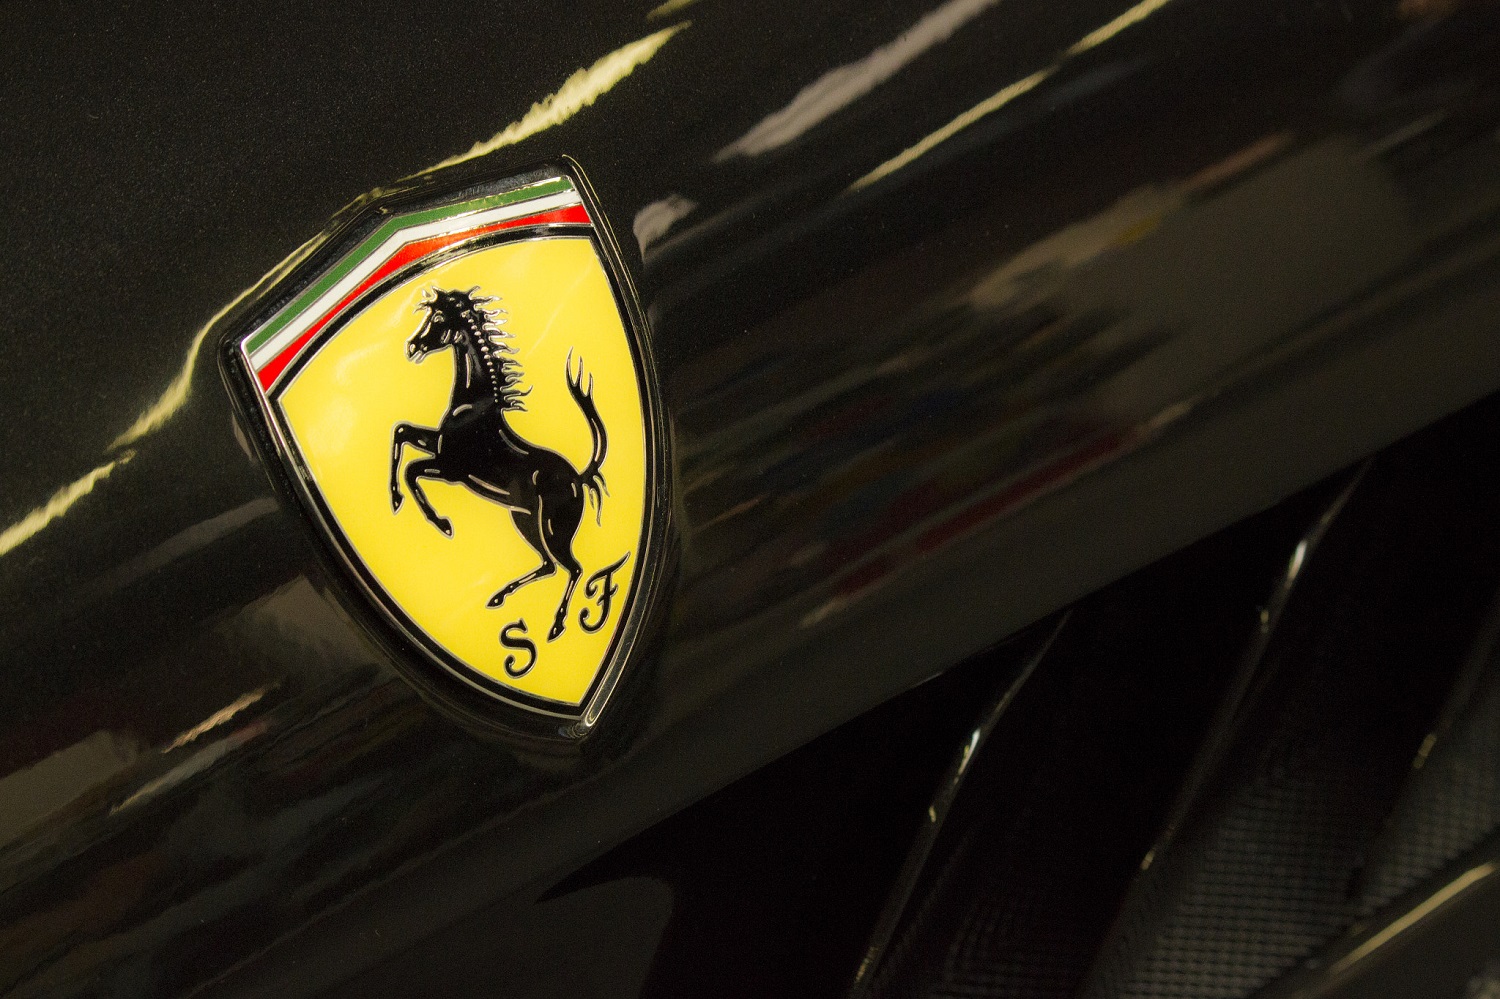 UPDATE 1-New Roma model joins Ferrari's 'prancing horse' stable